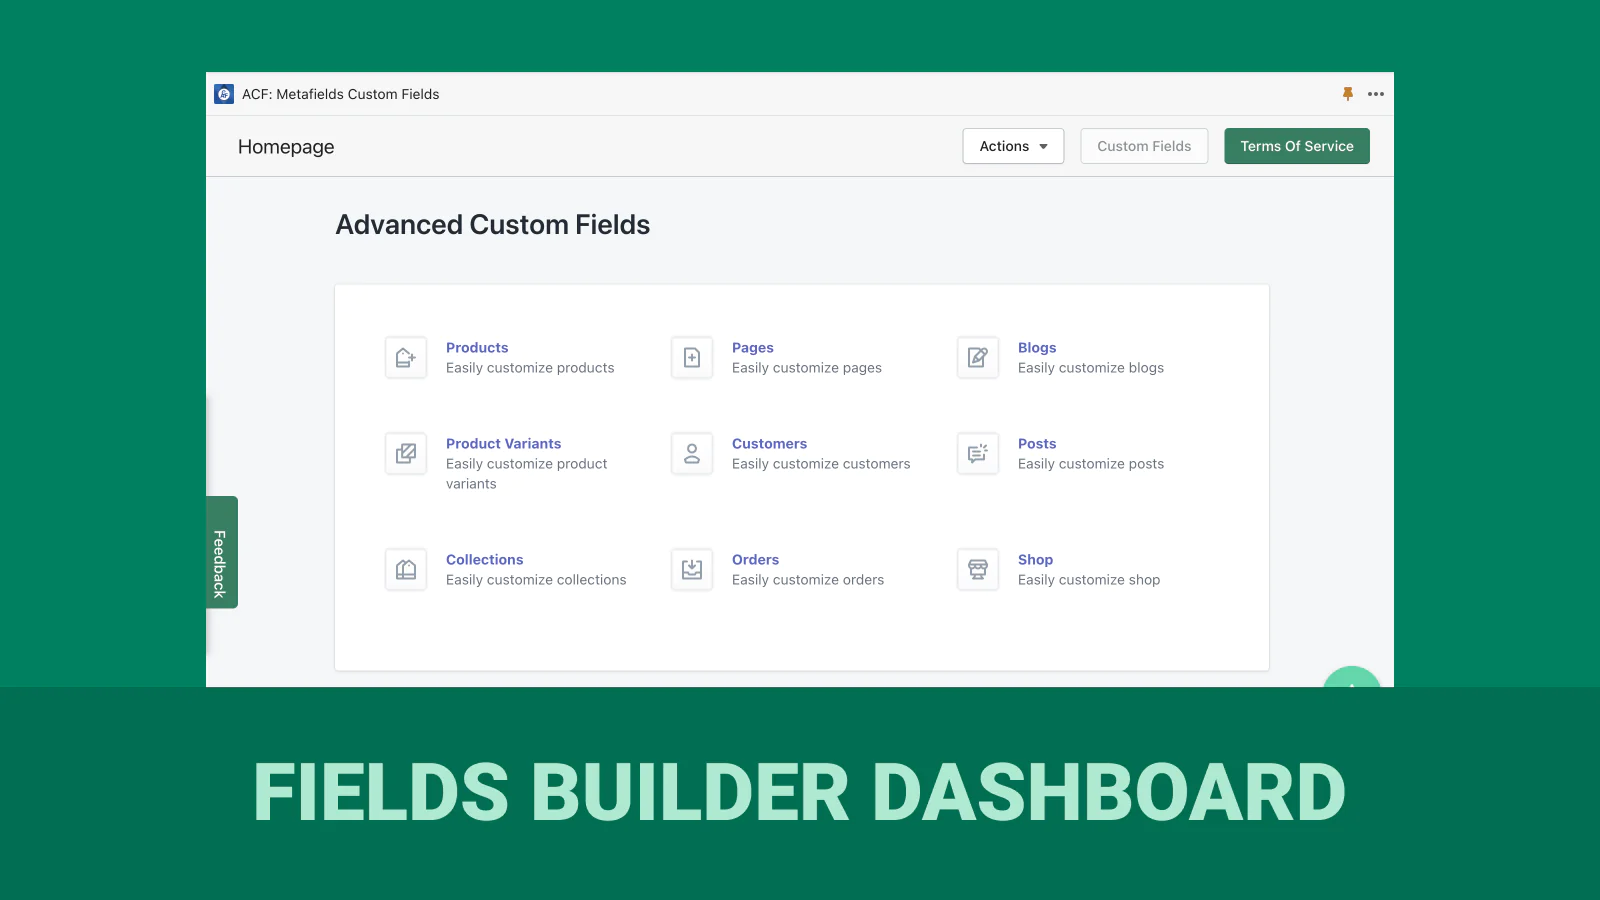 acf-metafields-custom-fields-builder-dashboard